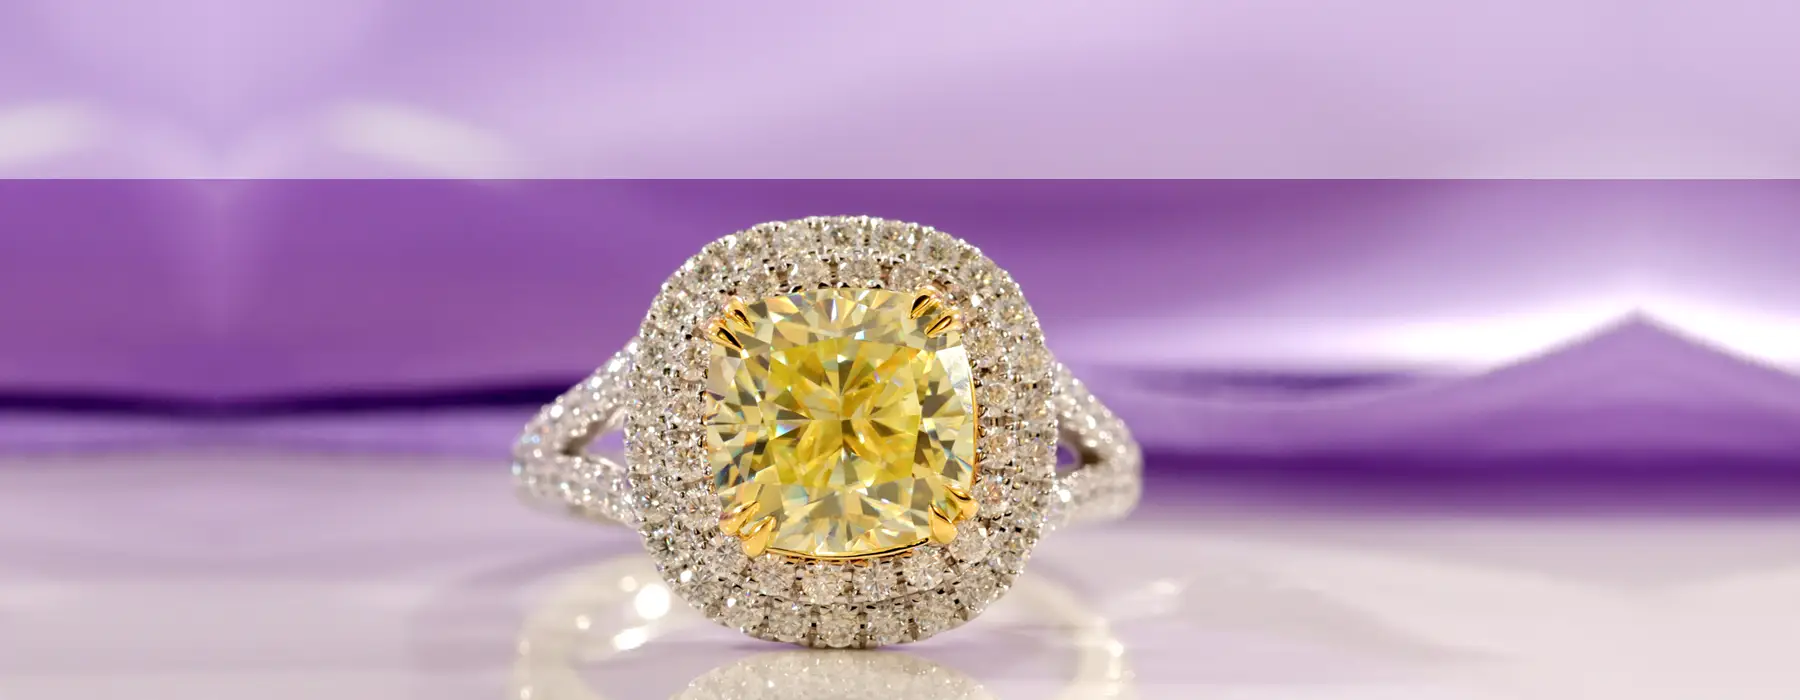 create your own custom lab grown diamond engagements rings at Quorri Canada